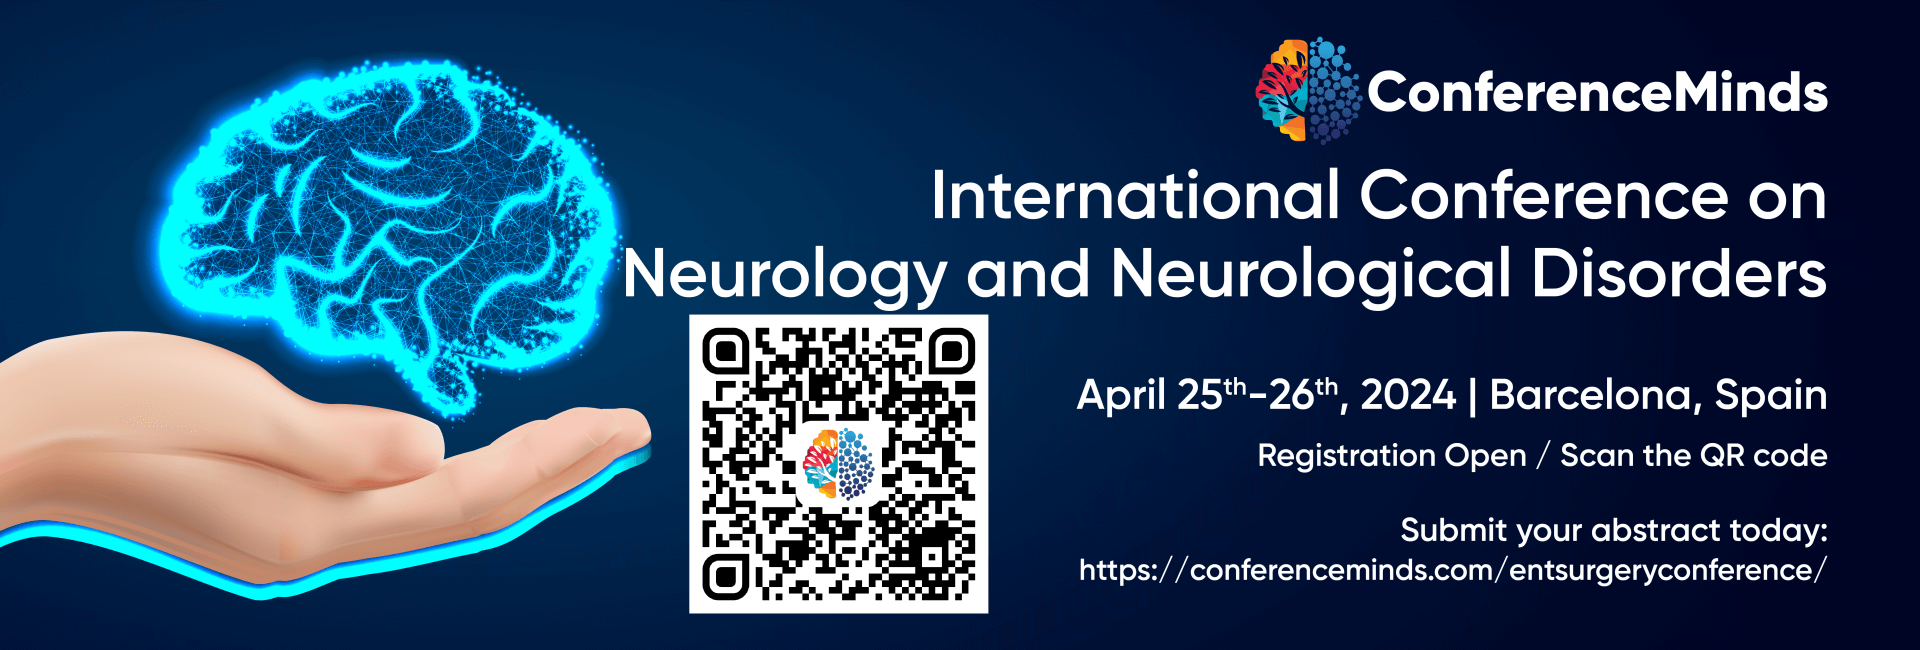 Neurology Conference 2024 Neuroscience Conference 2024 Brain